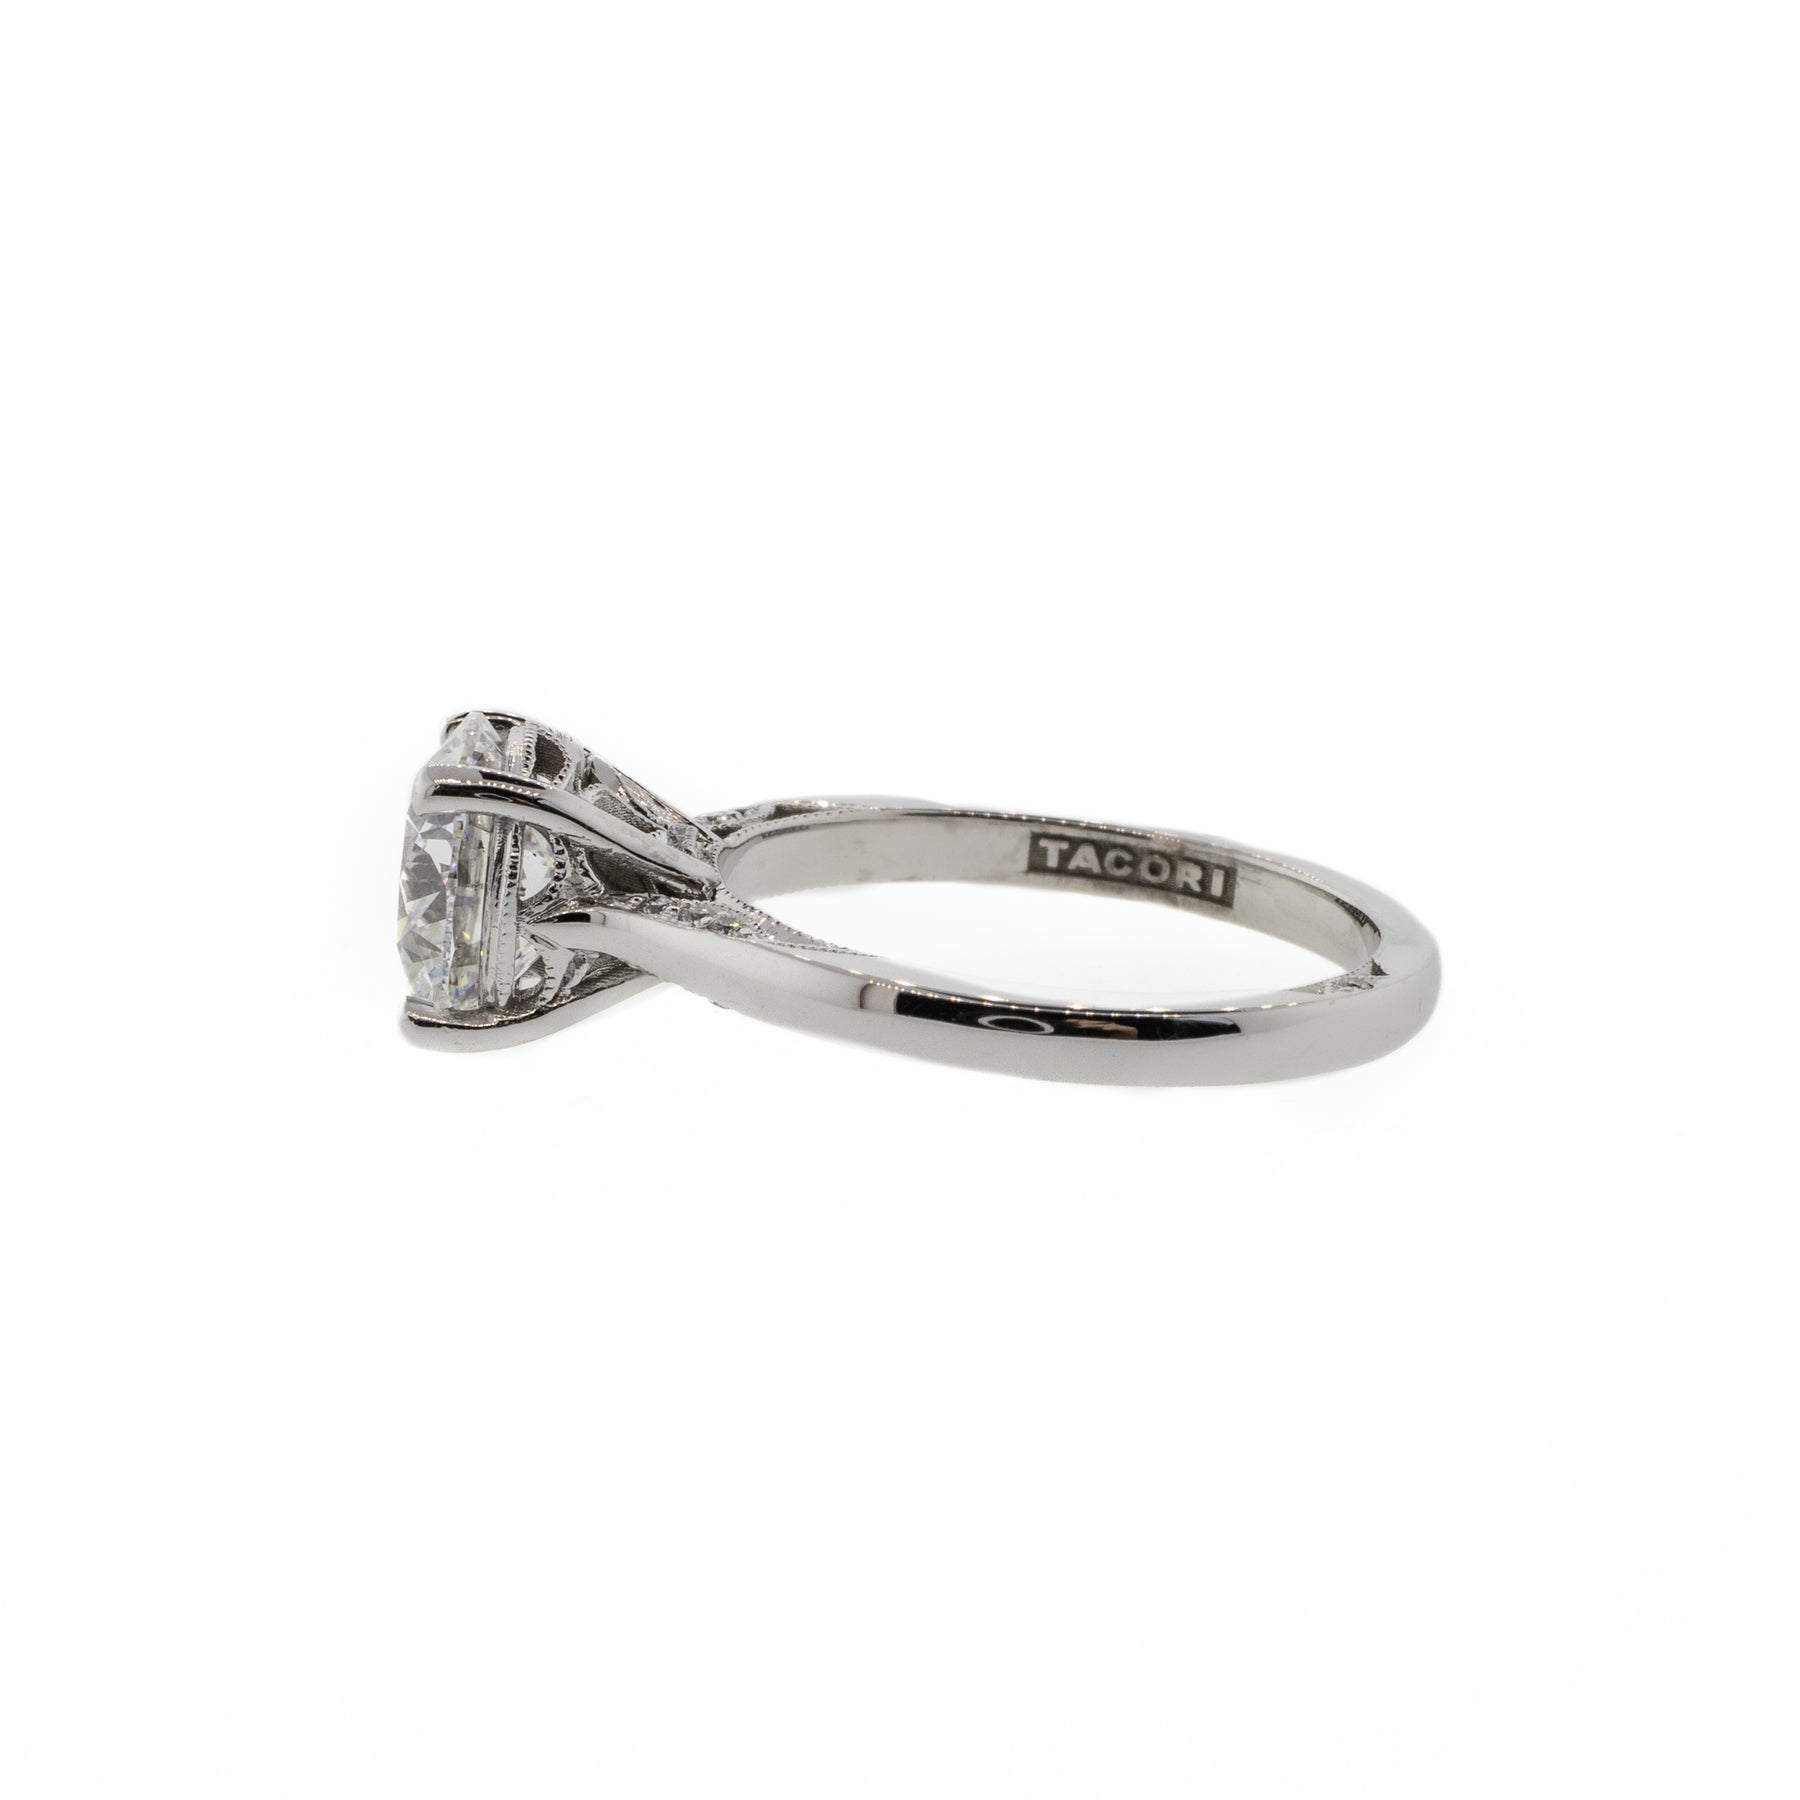 2.00ct Tacori Brilliant Cut Solitaire Diamond Ring